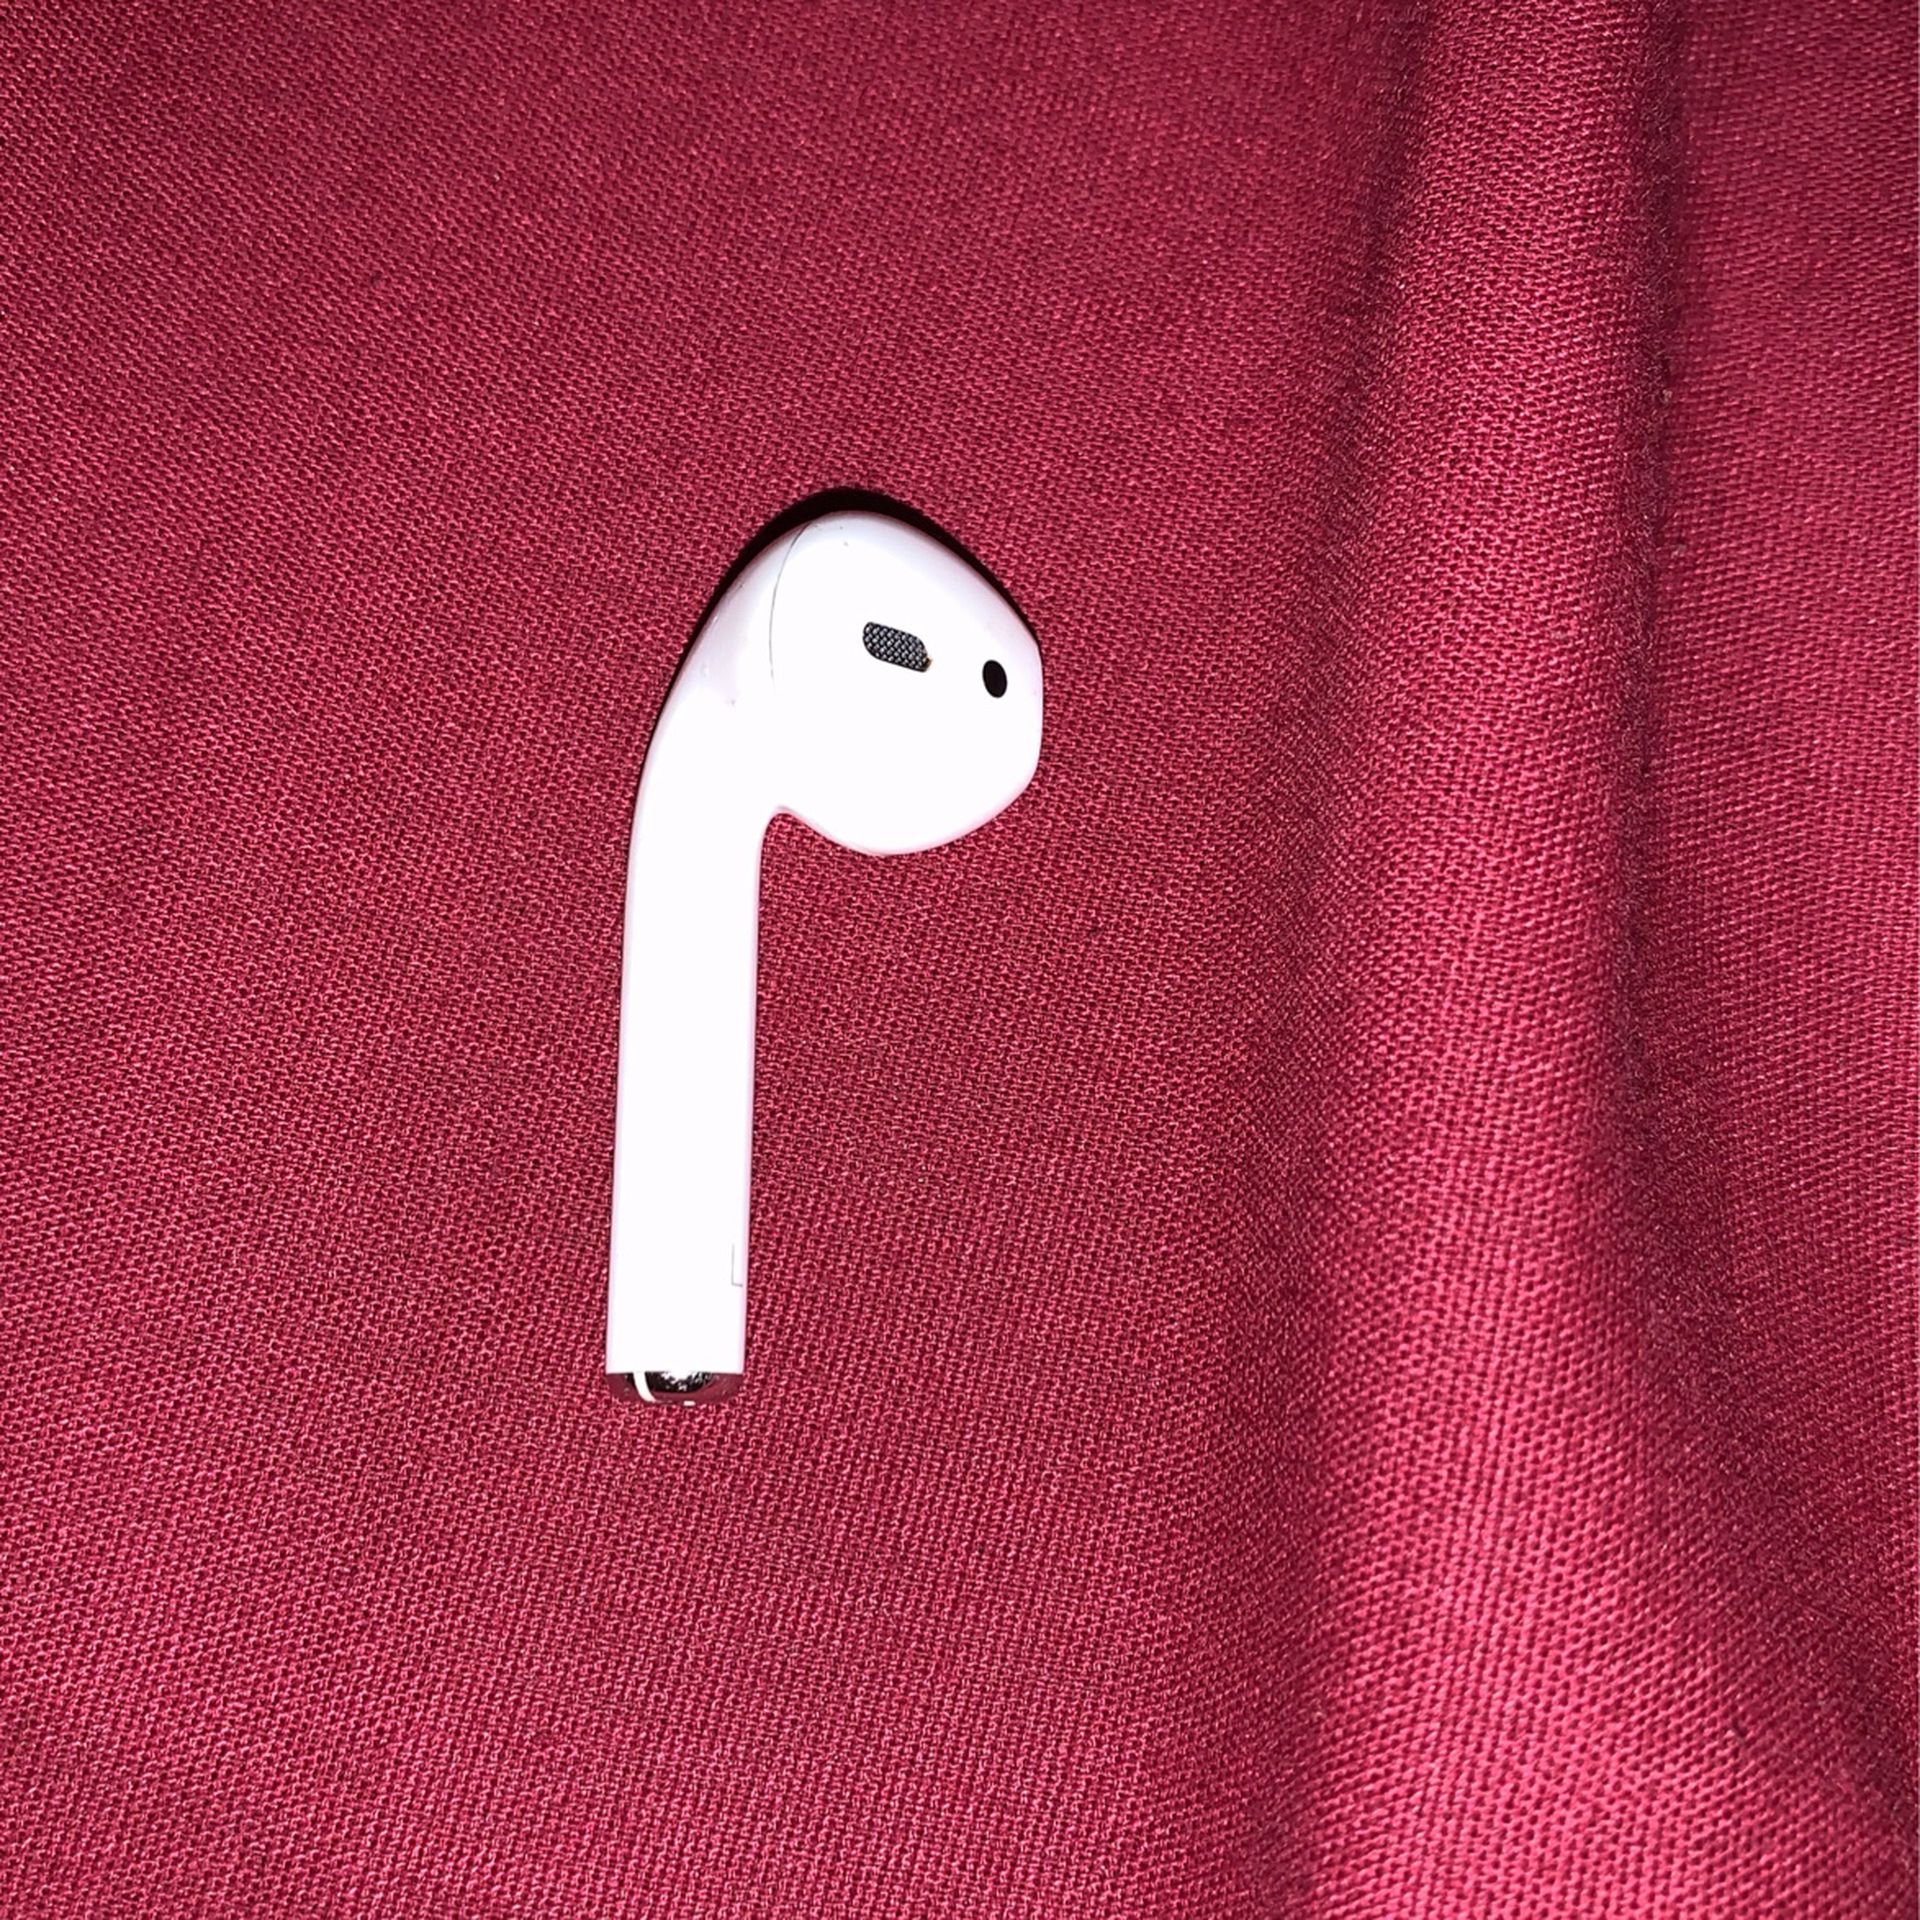 Apple AirPods Left Headphone